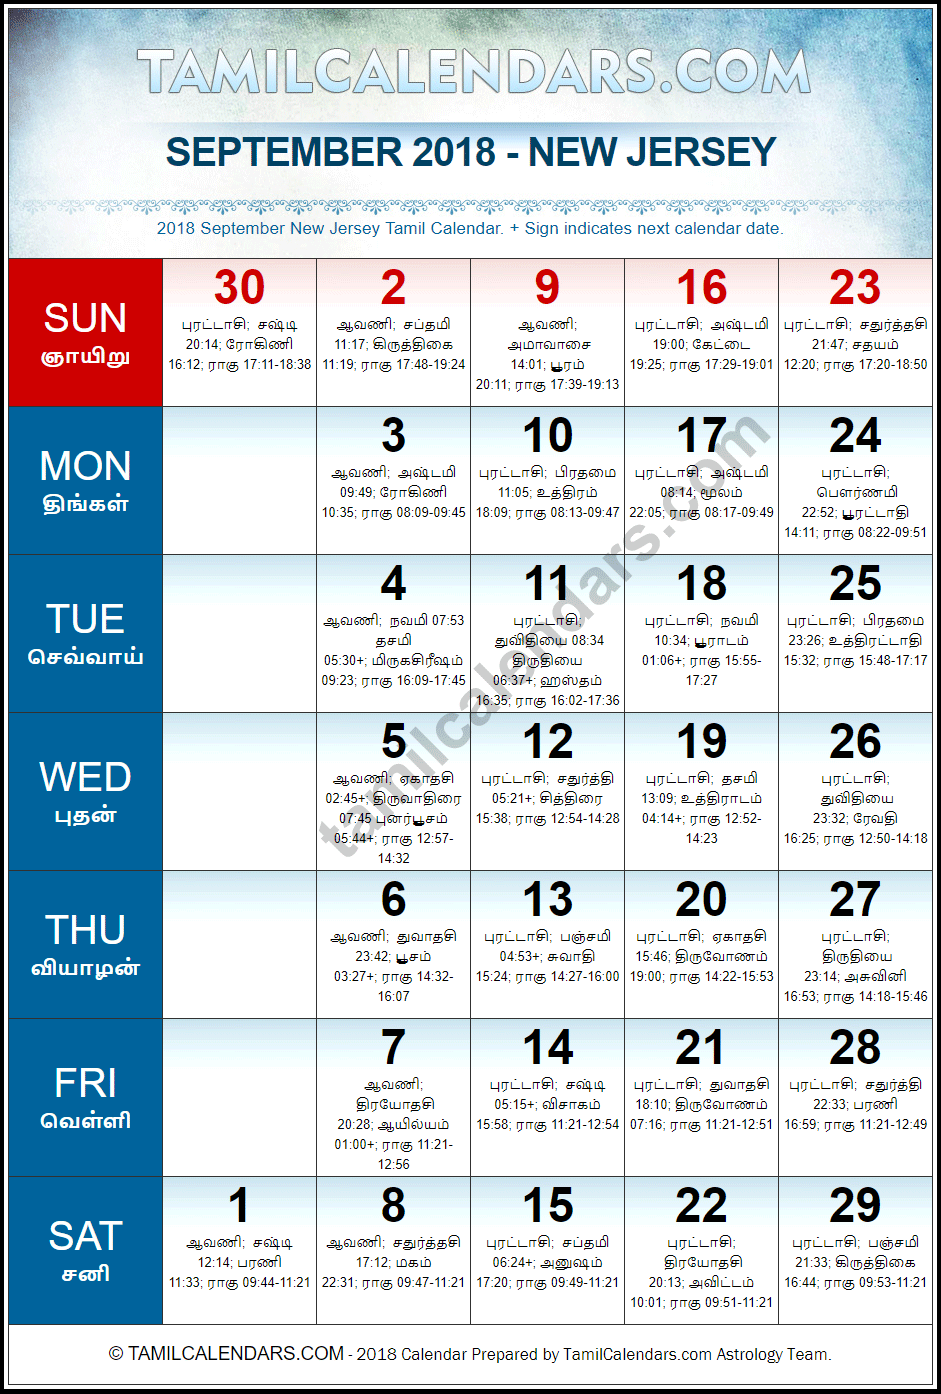 September 2018 Tamil Calendar for New Jersey, USA